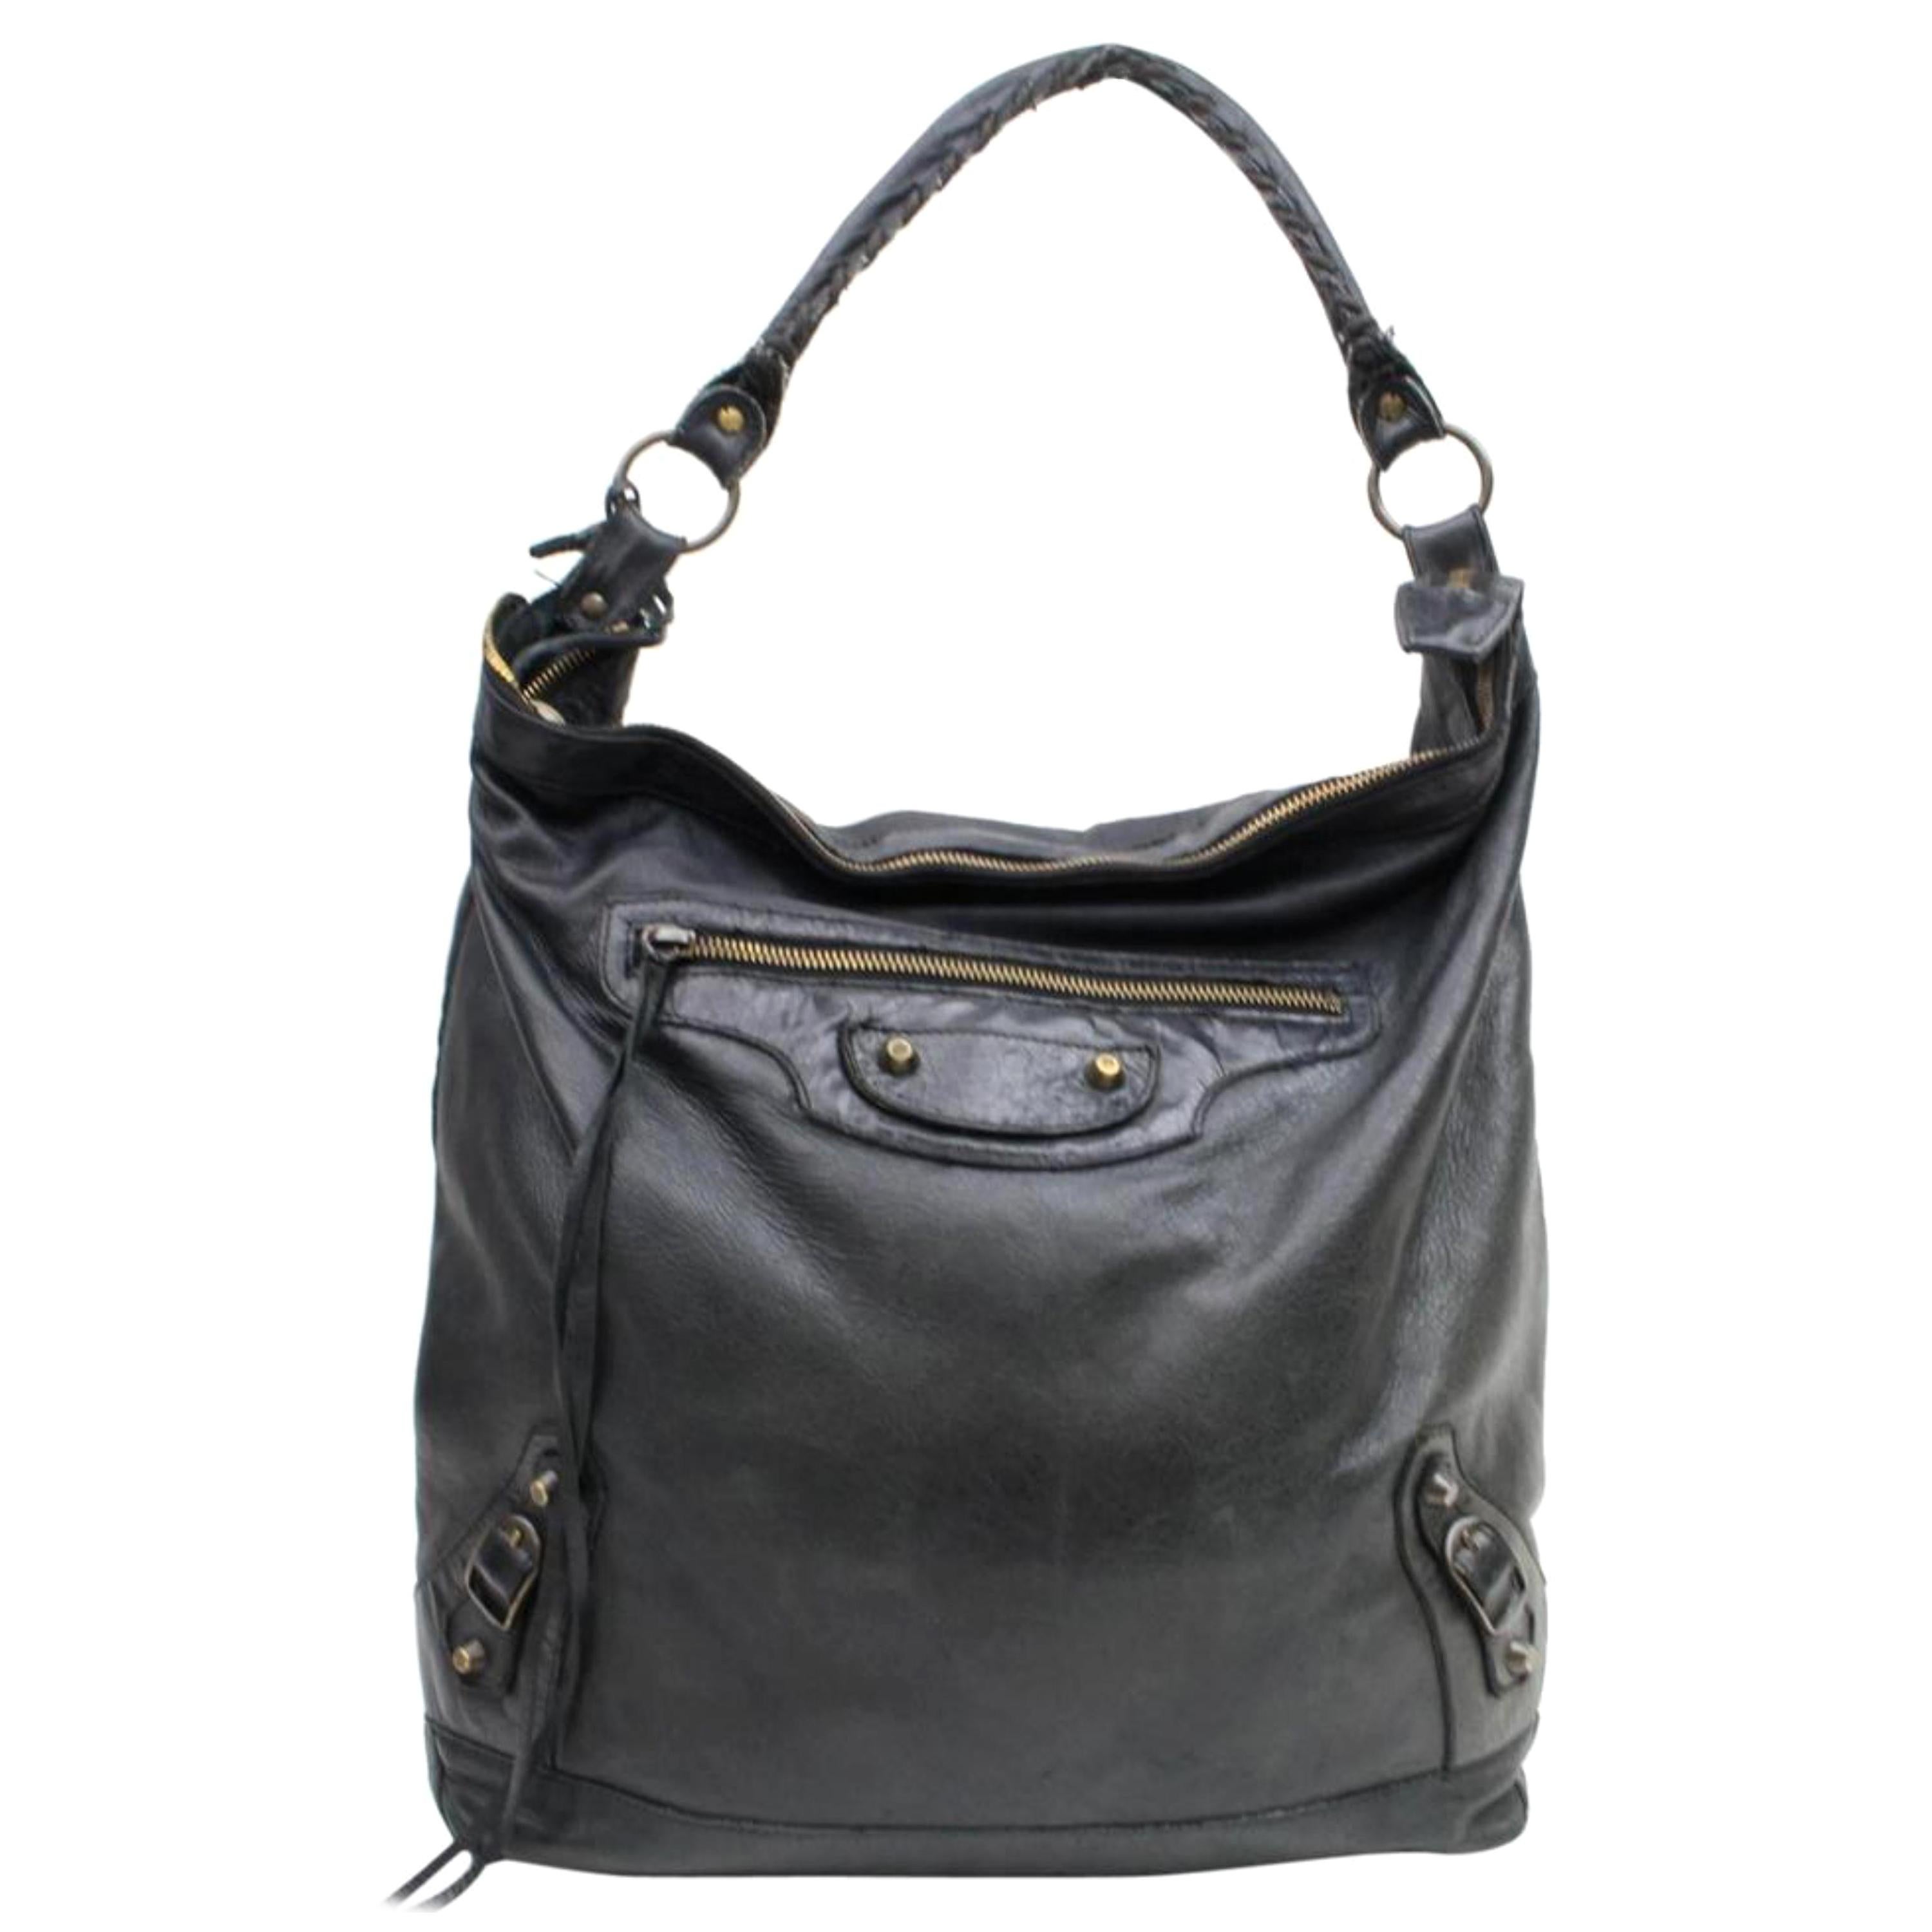 Balenciaga The Day Hobo 868349 Black Leather Shoulder Bag For Sale